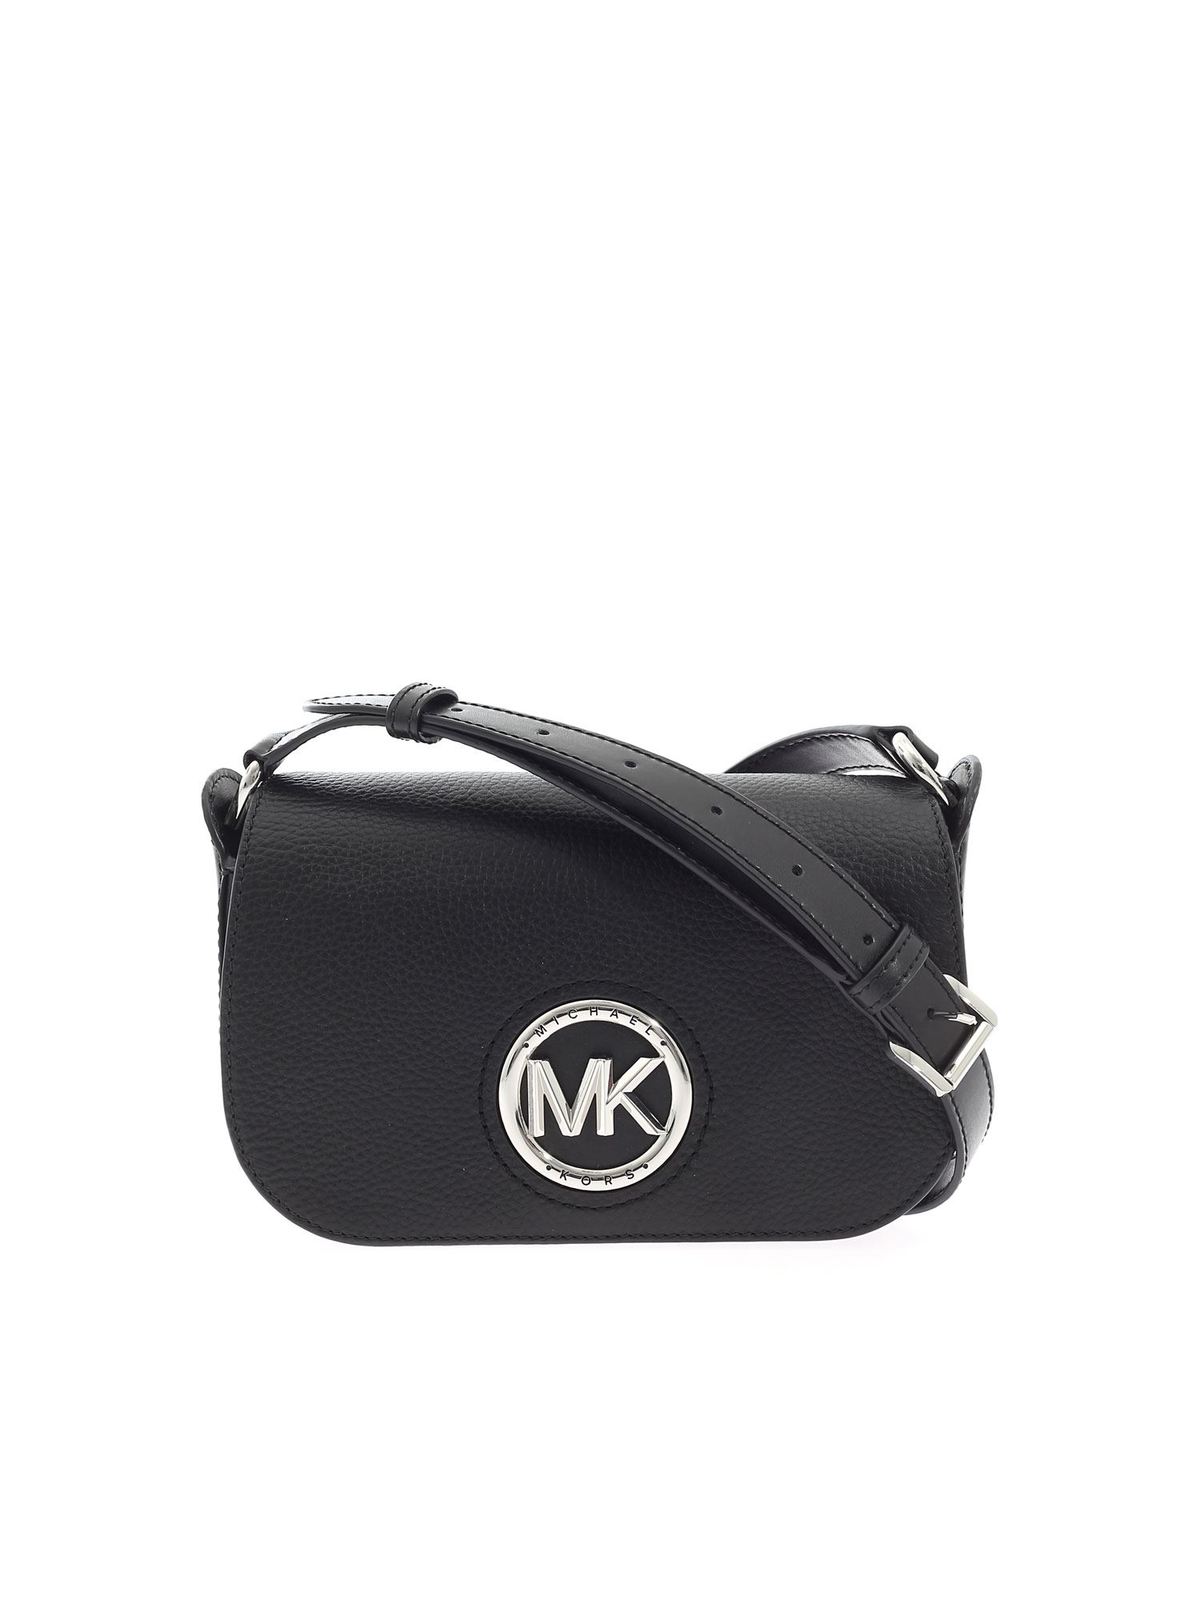 mk black bag